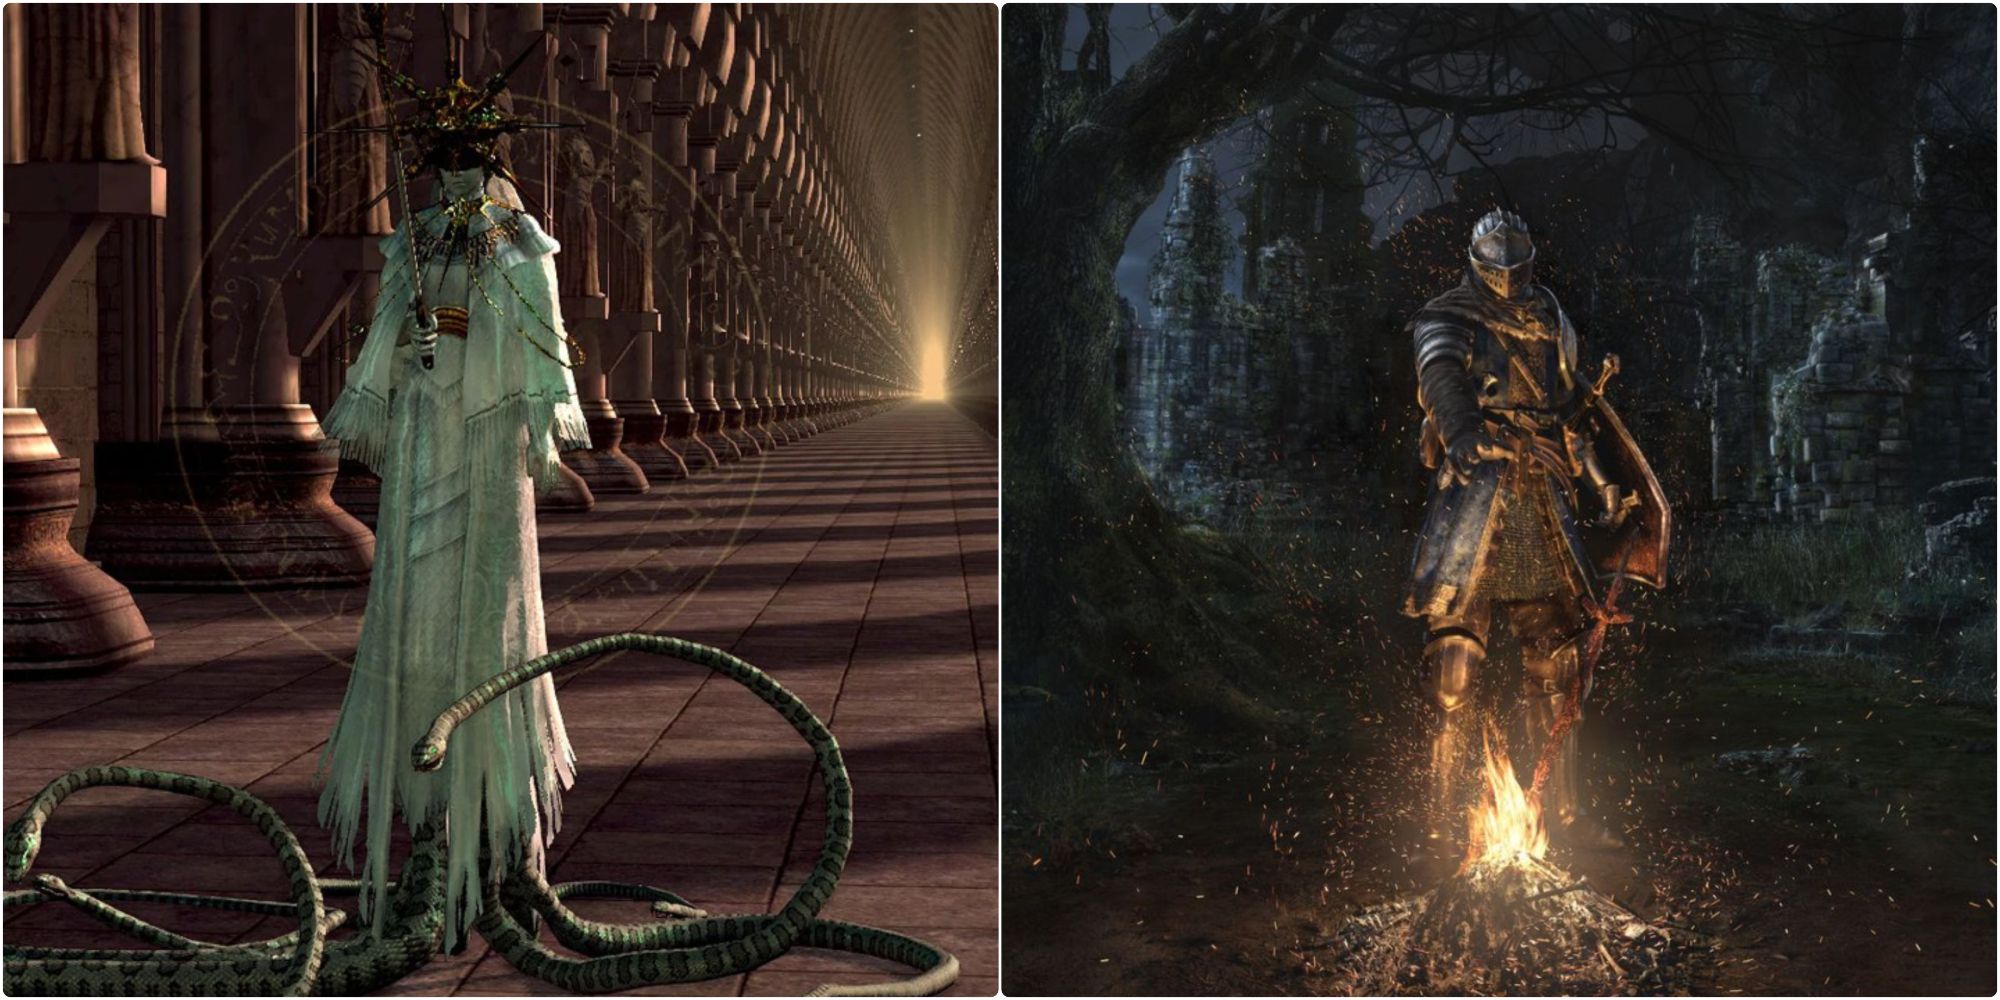 Dark Sun Gwyndolin and Dark Souls cover art collage